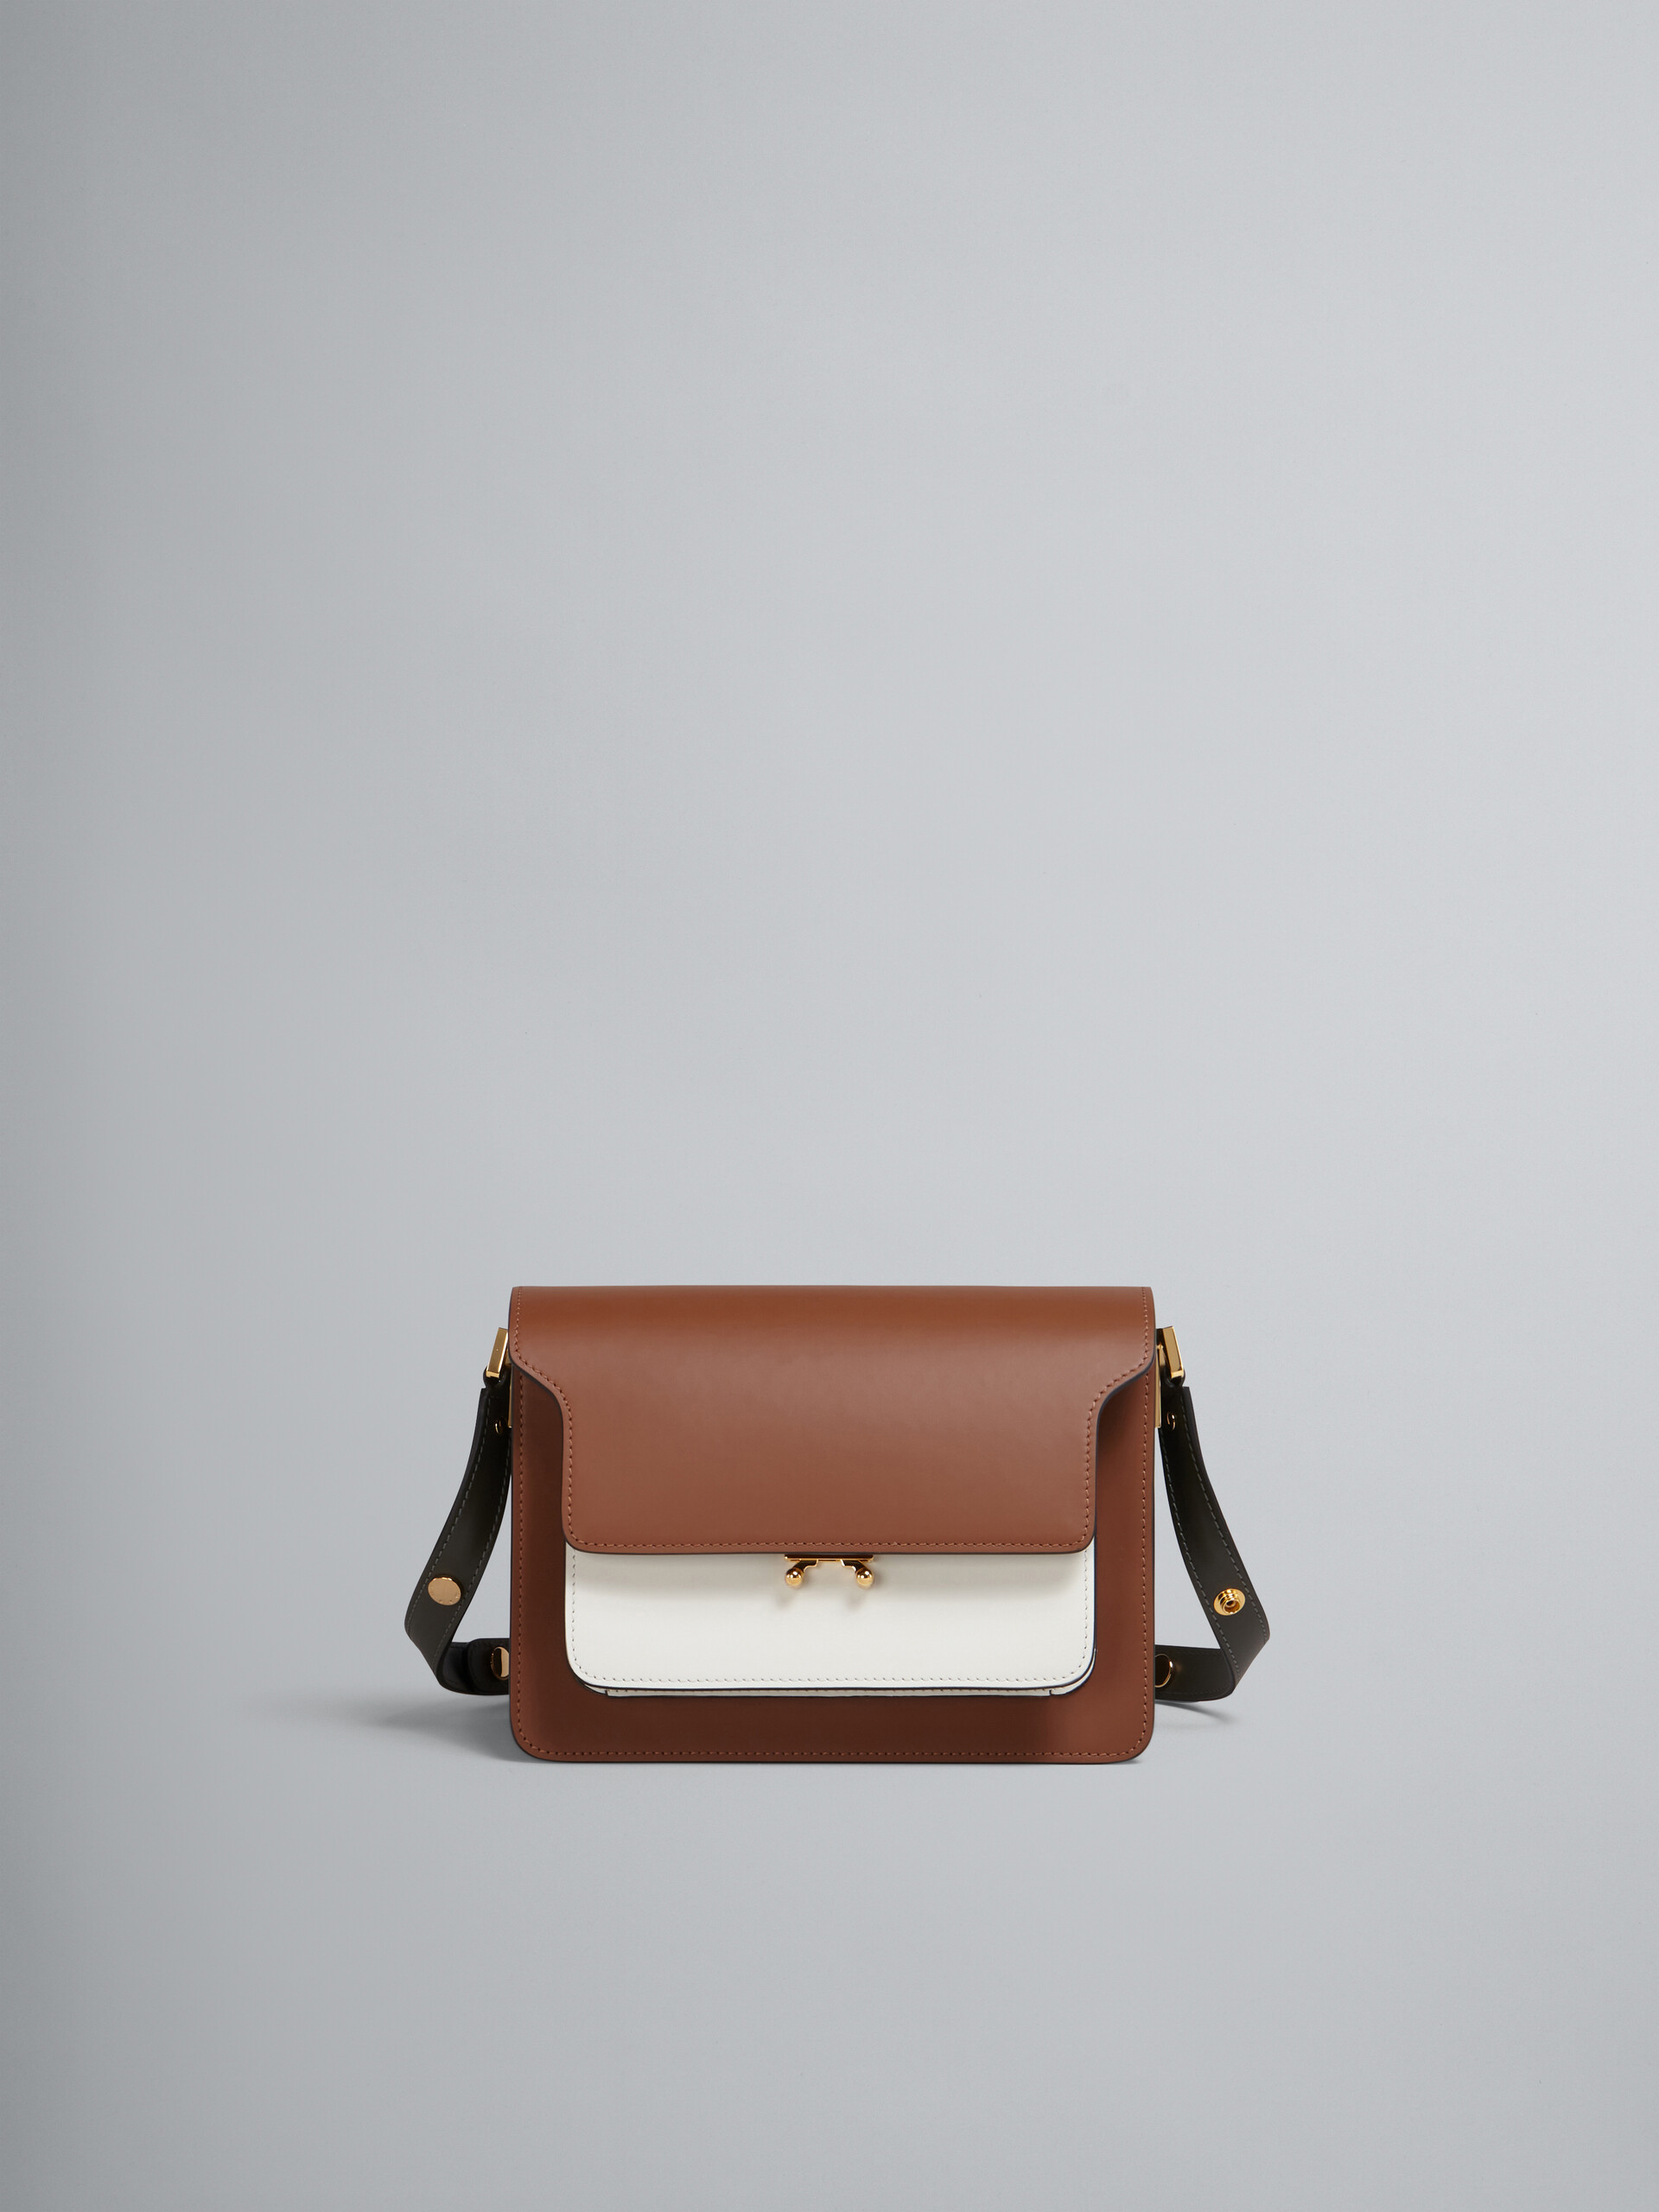 TRUNK media bag in brown white and green leather - Shoulder Bag - Image 1